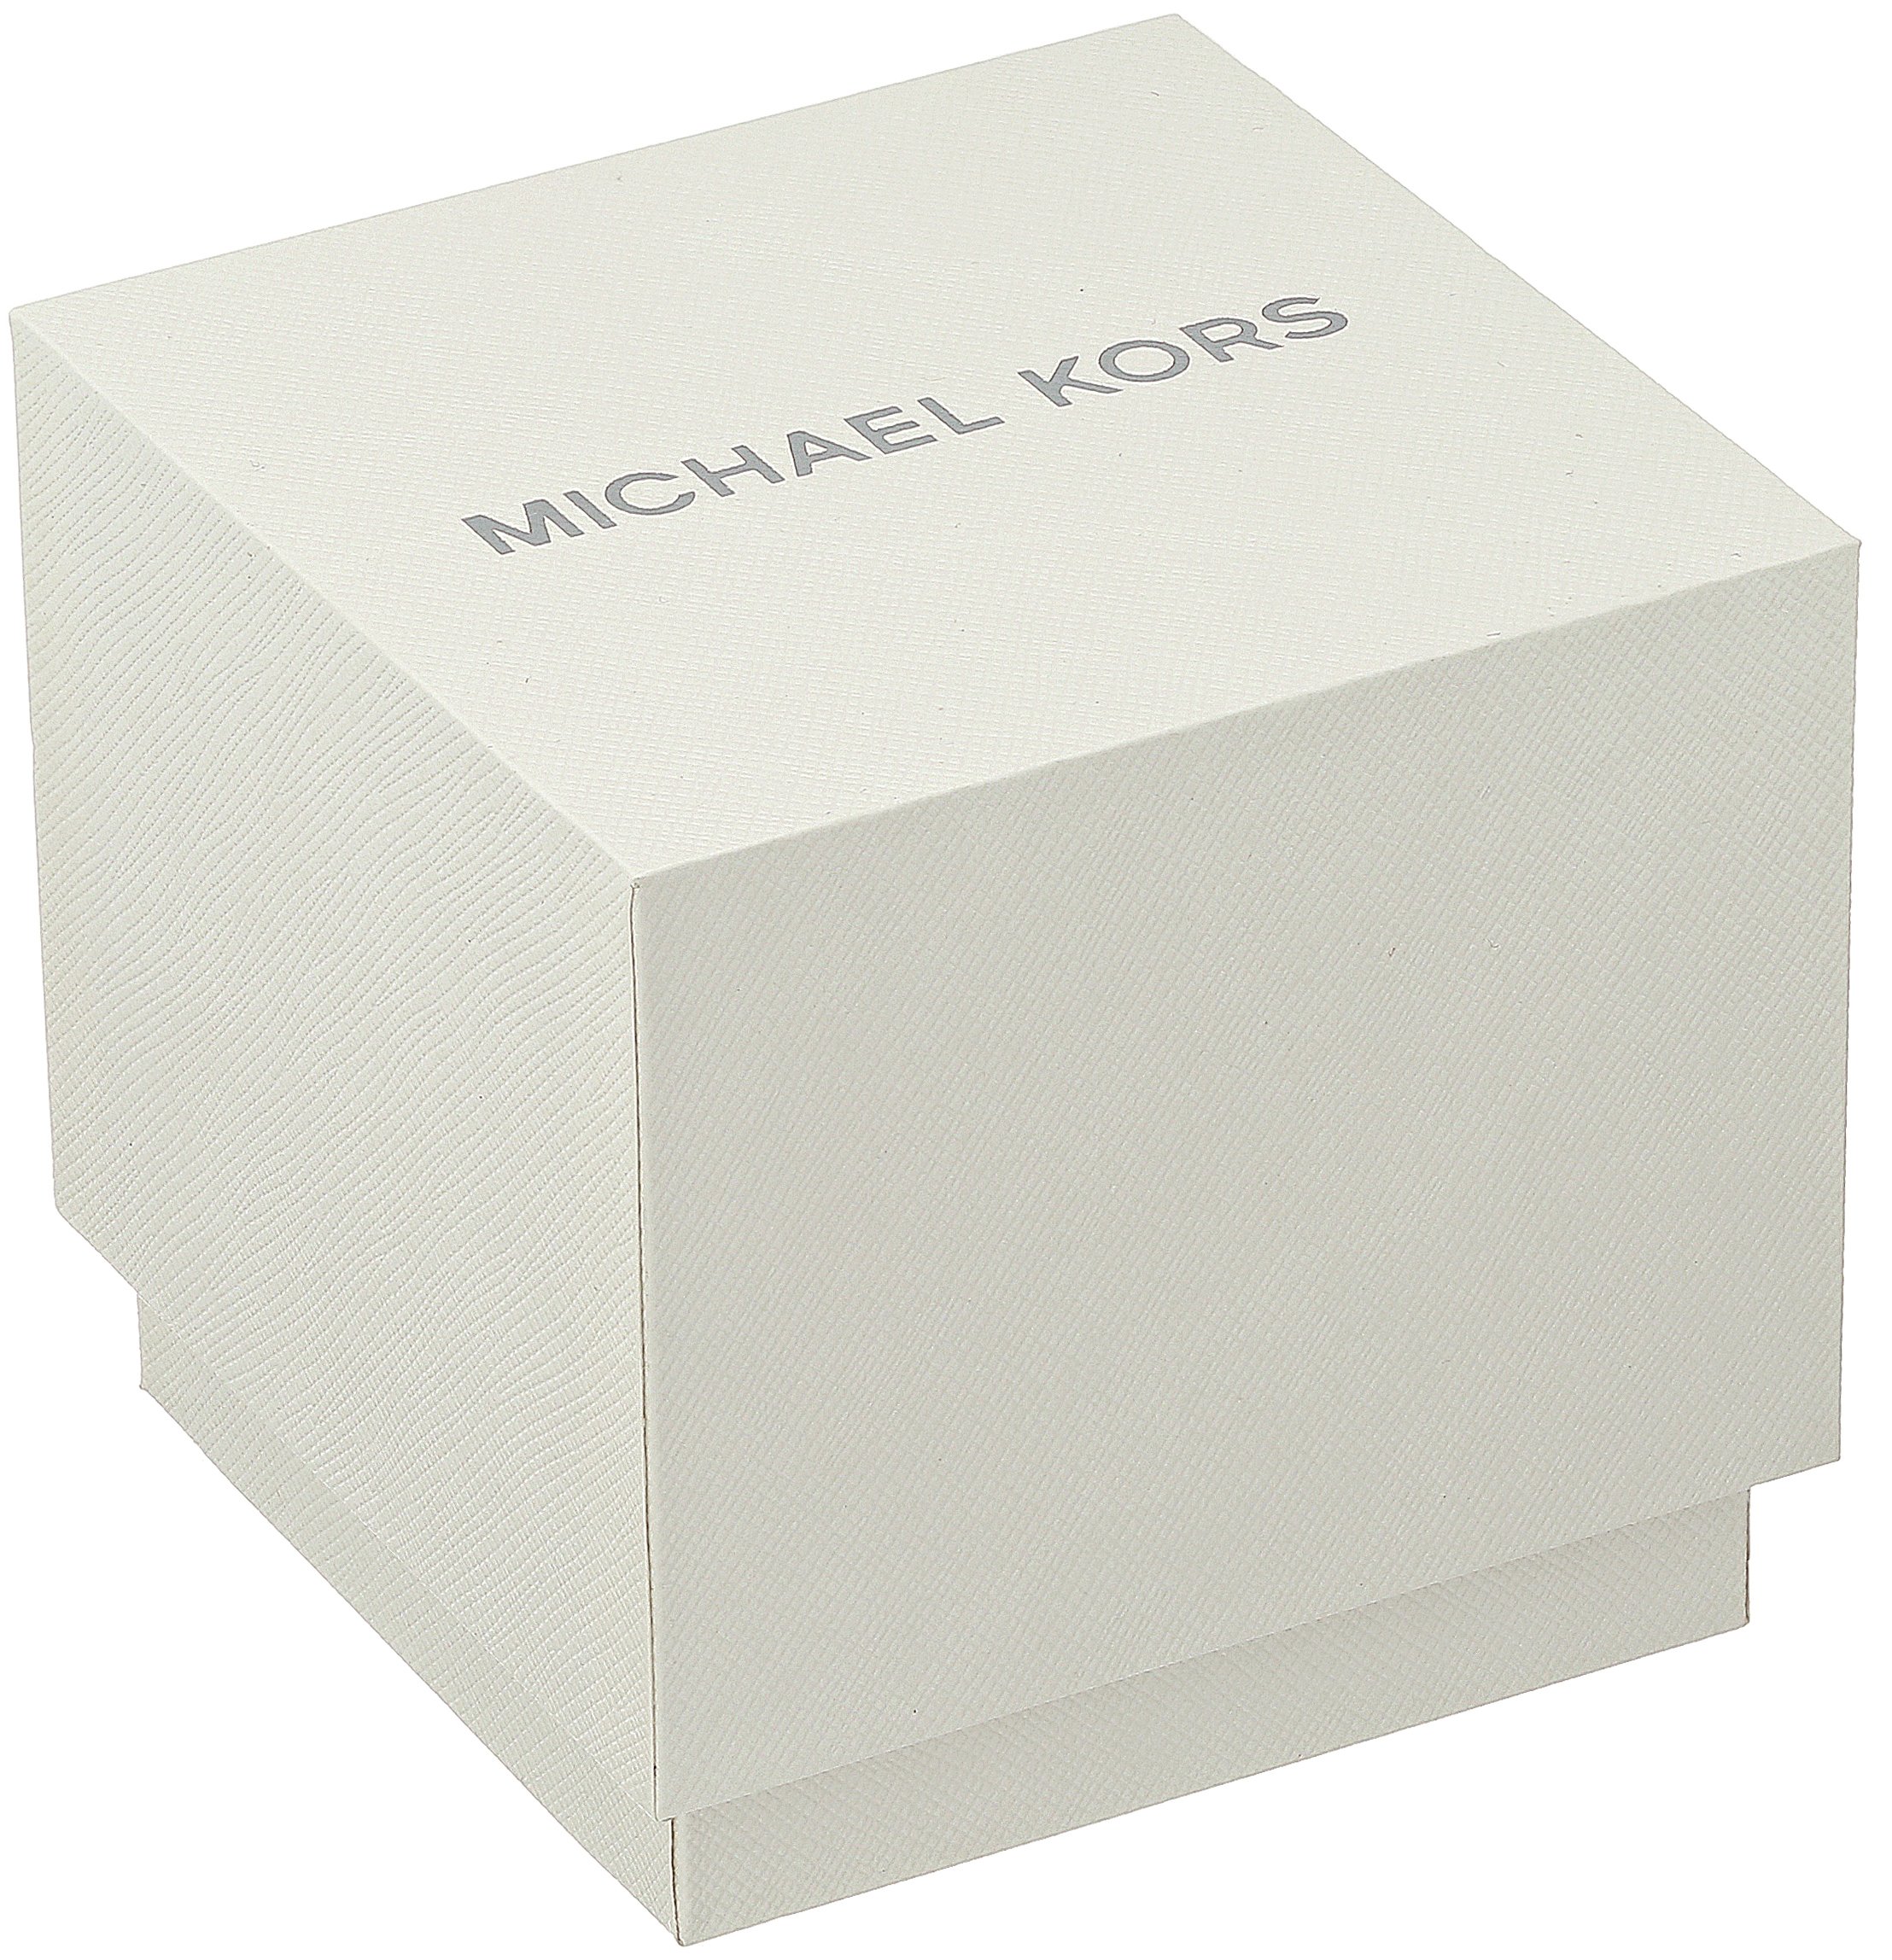 Michael Kors Men's DylanBlack Watch MK8556